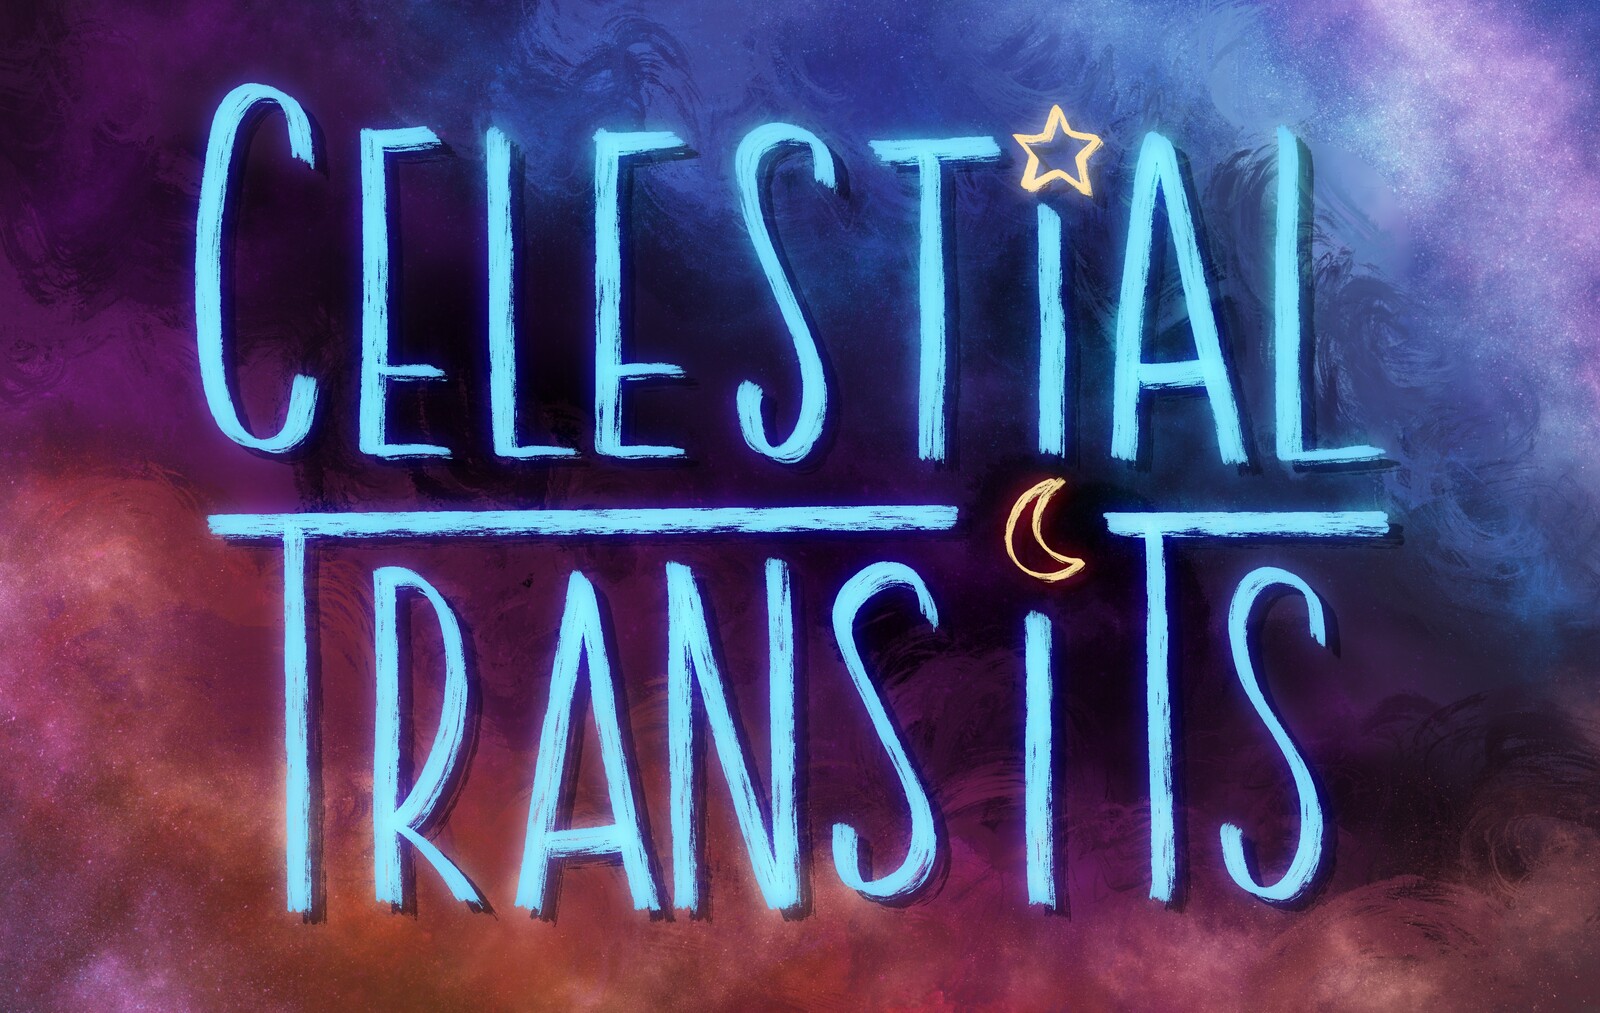 Title Design - Celestial Transits